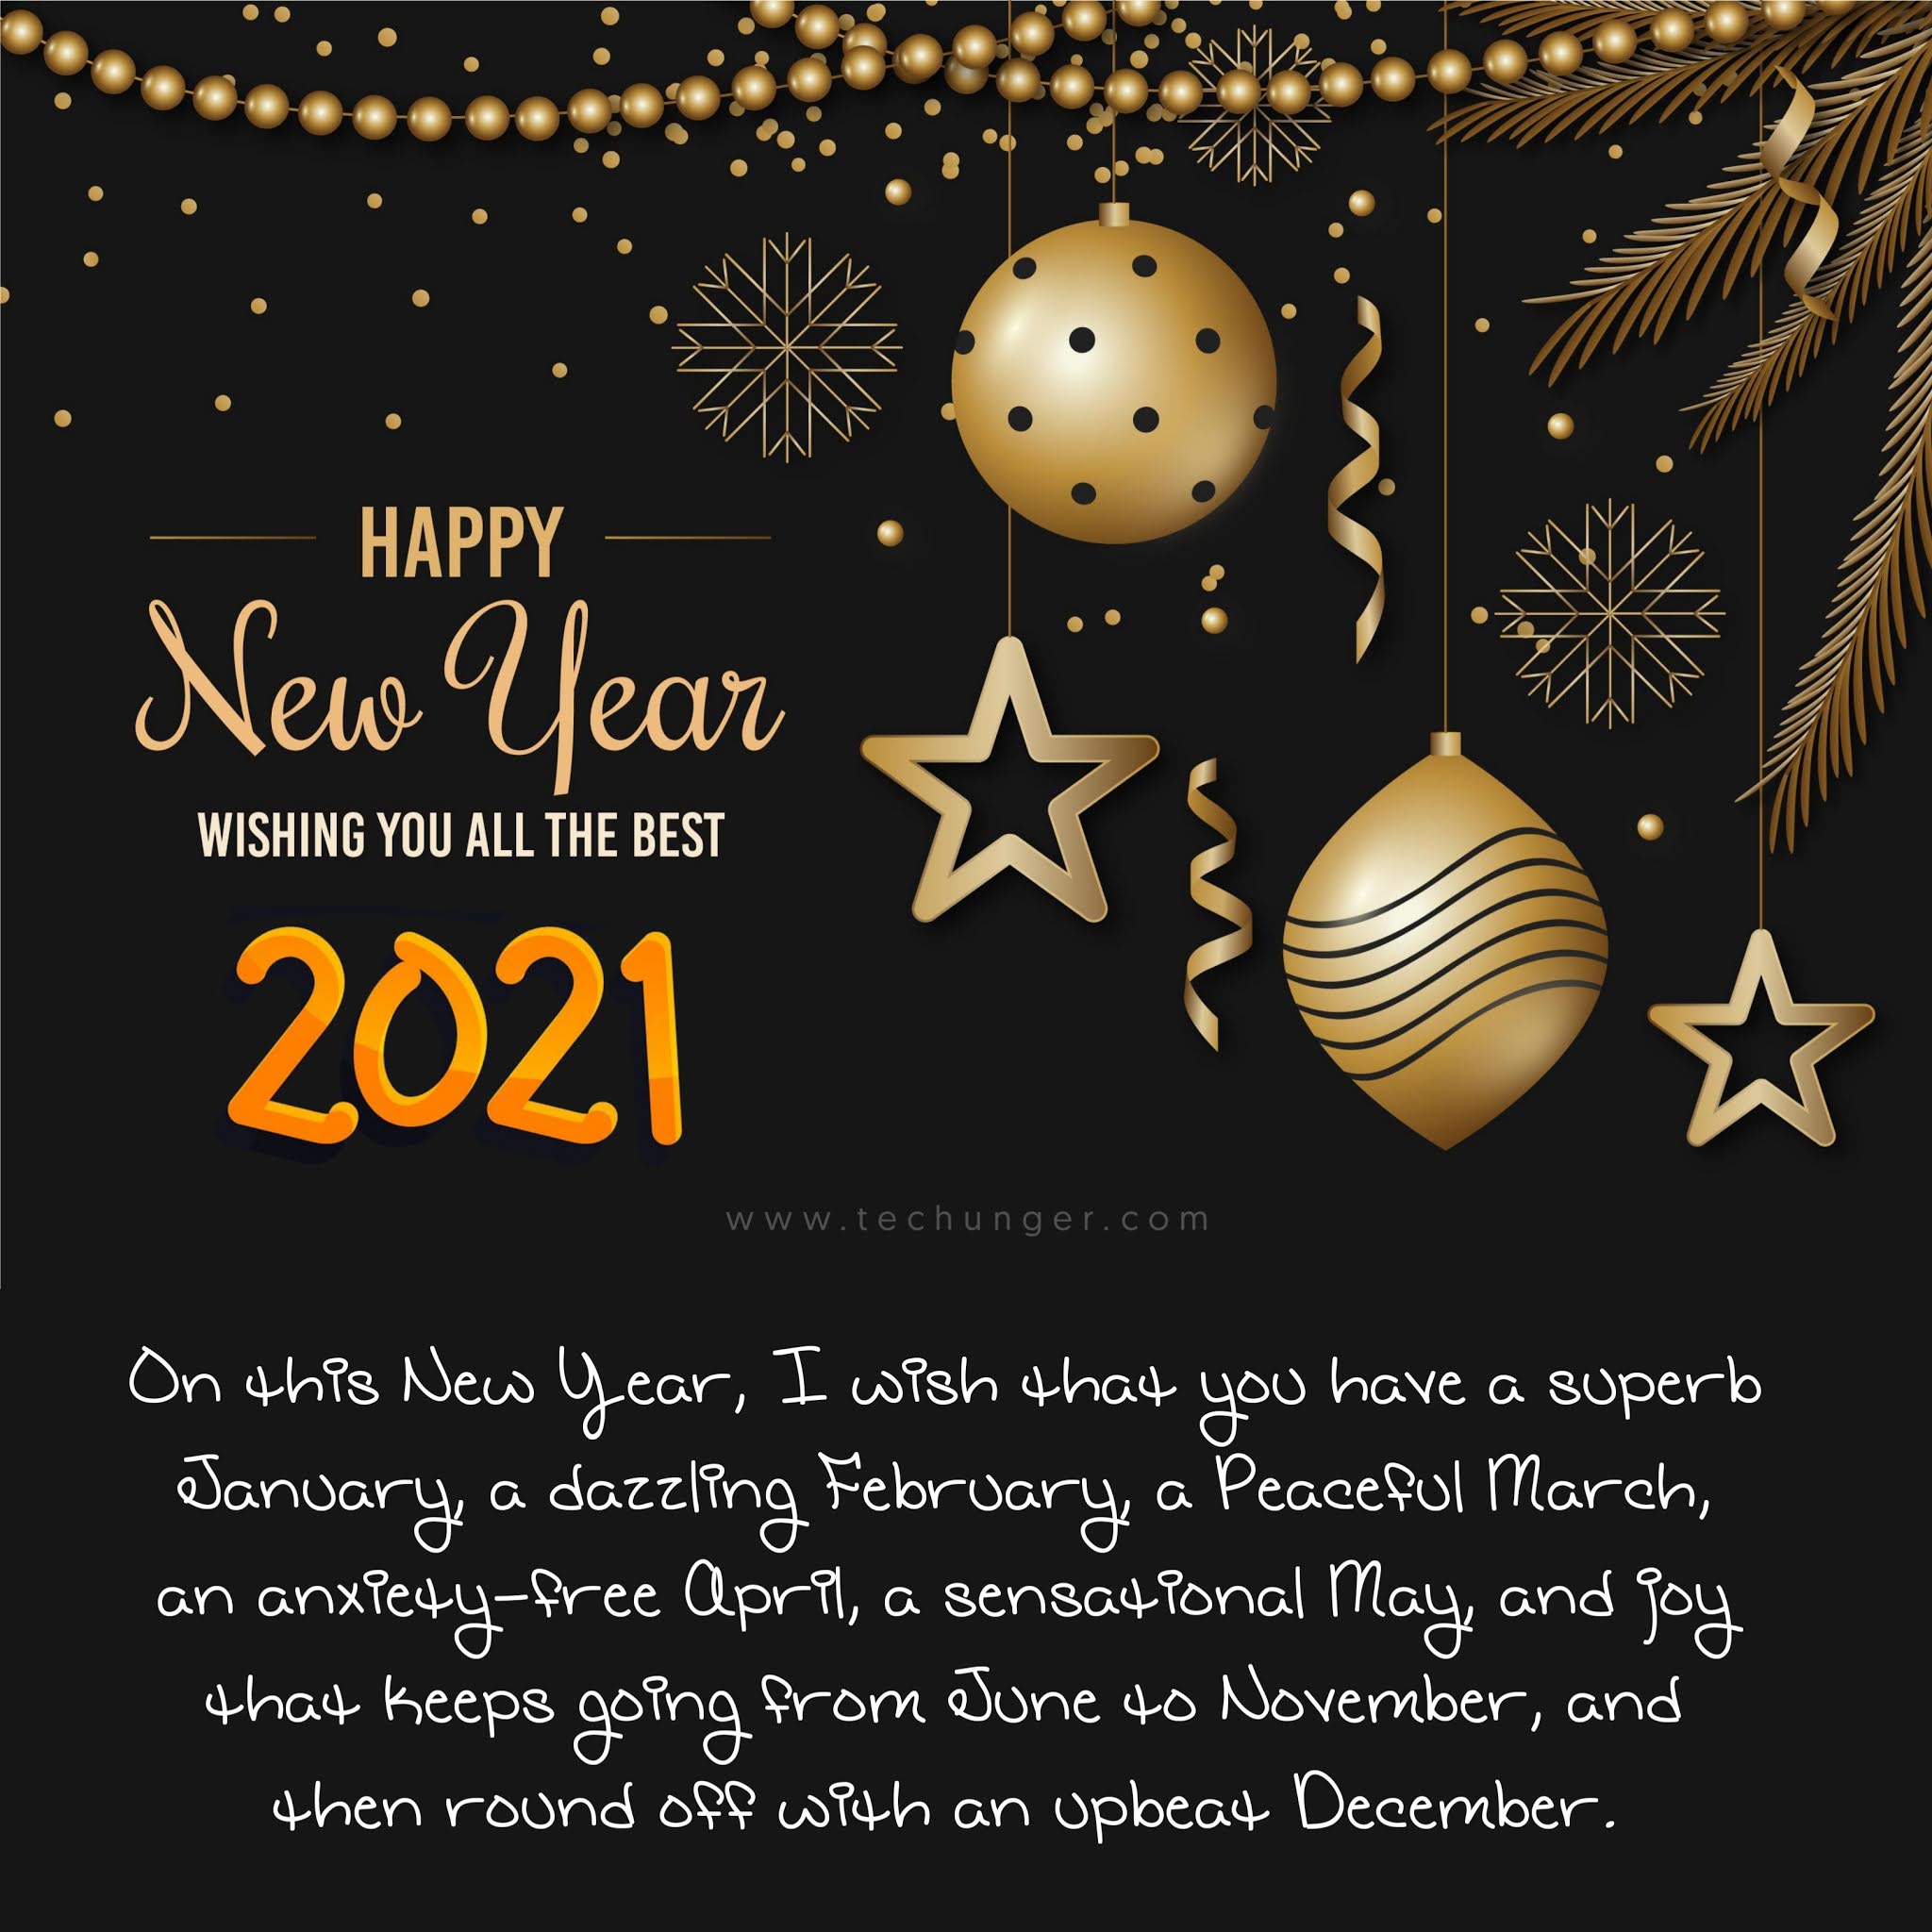 Happy New Year 2021, Happy new year images, new year 2021, new year status, new year hd status, 2021, free status, hd status, techunger new year images, techunger 2021, saurabh chaudhari